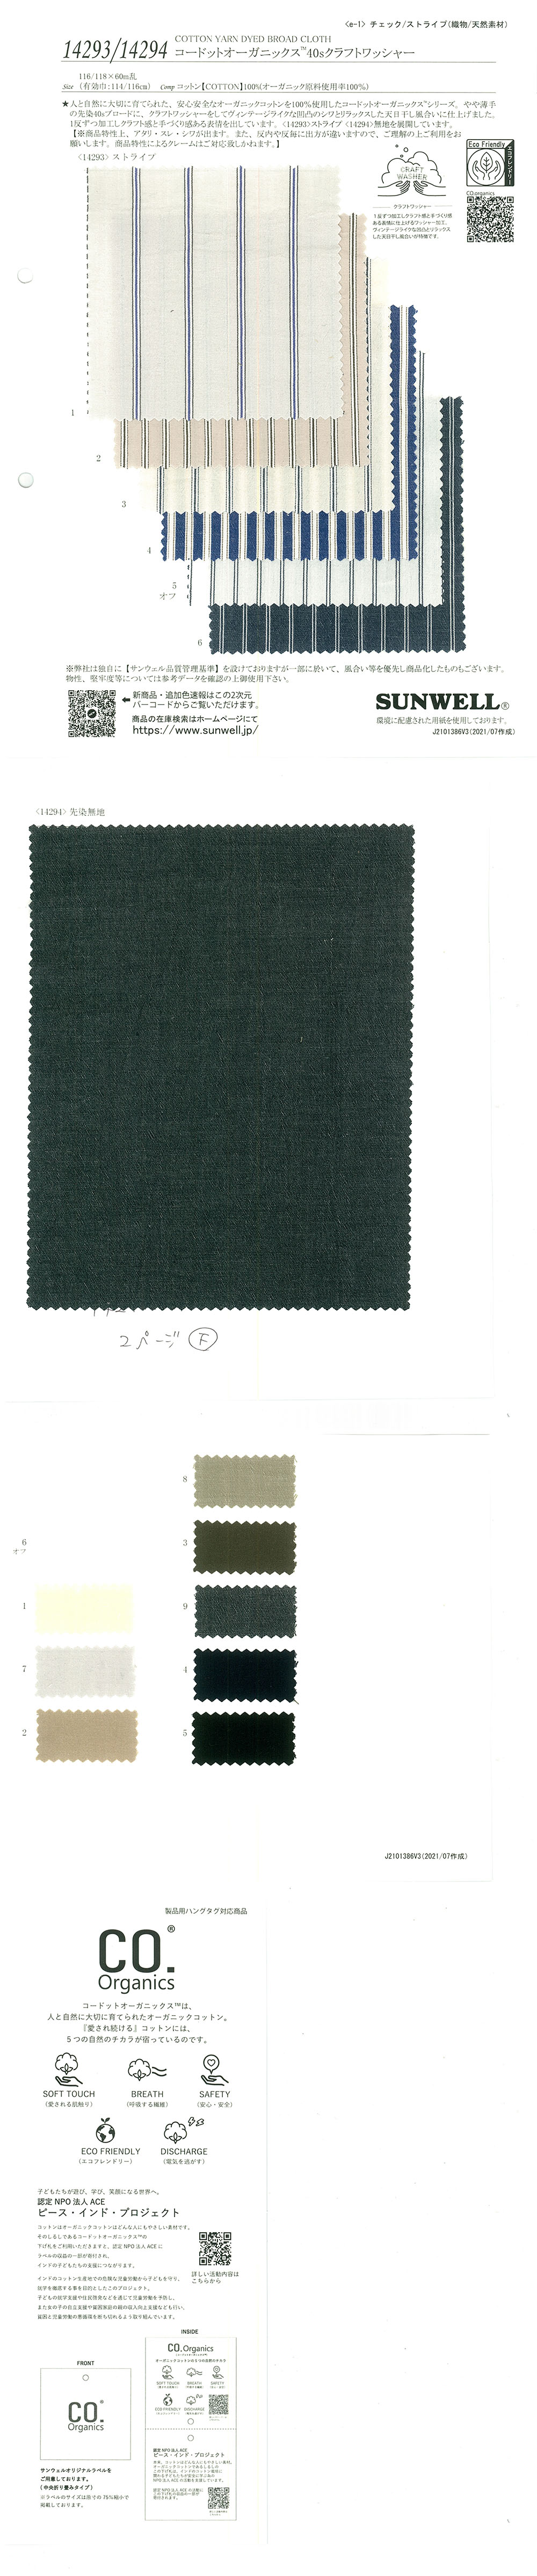 14294 Cordot Organics (R) 40 Single Thread Craft Washer Processing[Textile / Fabric] SUNWELL